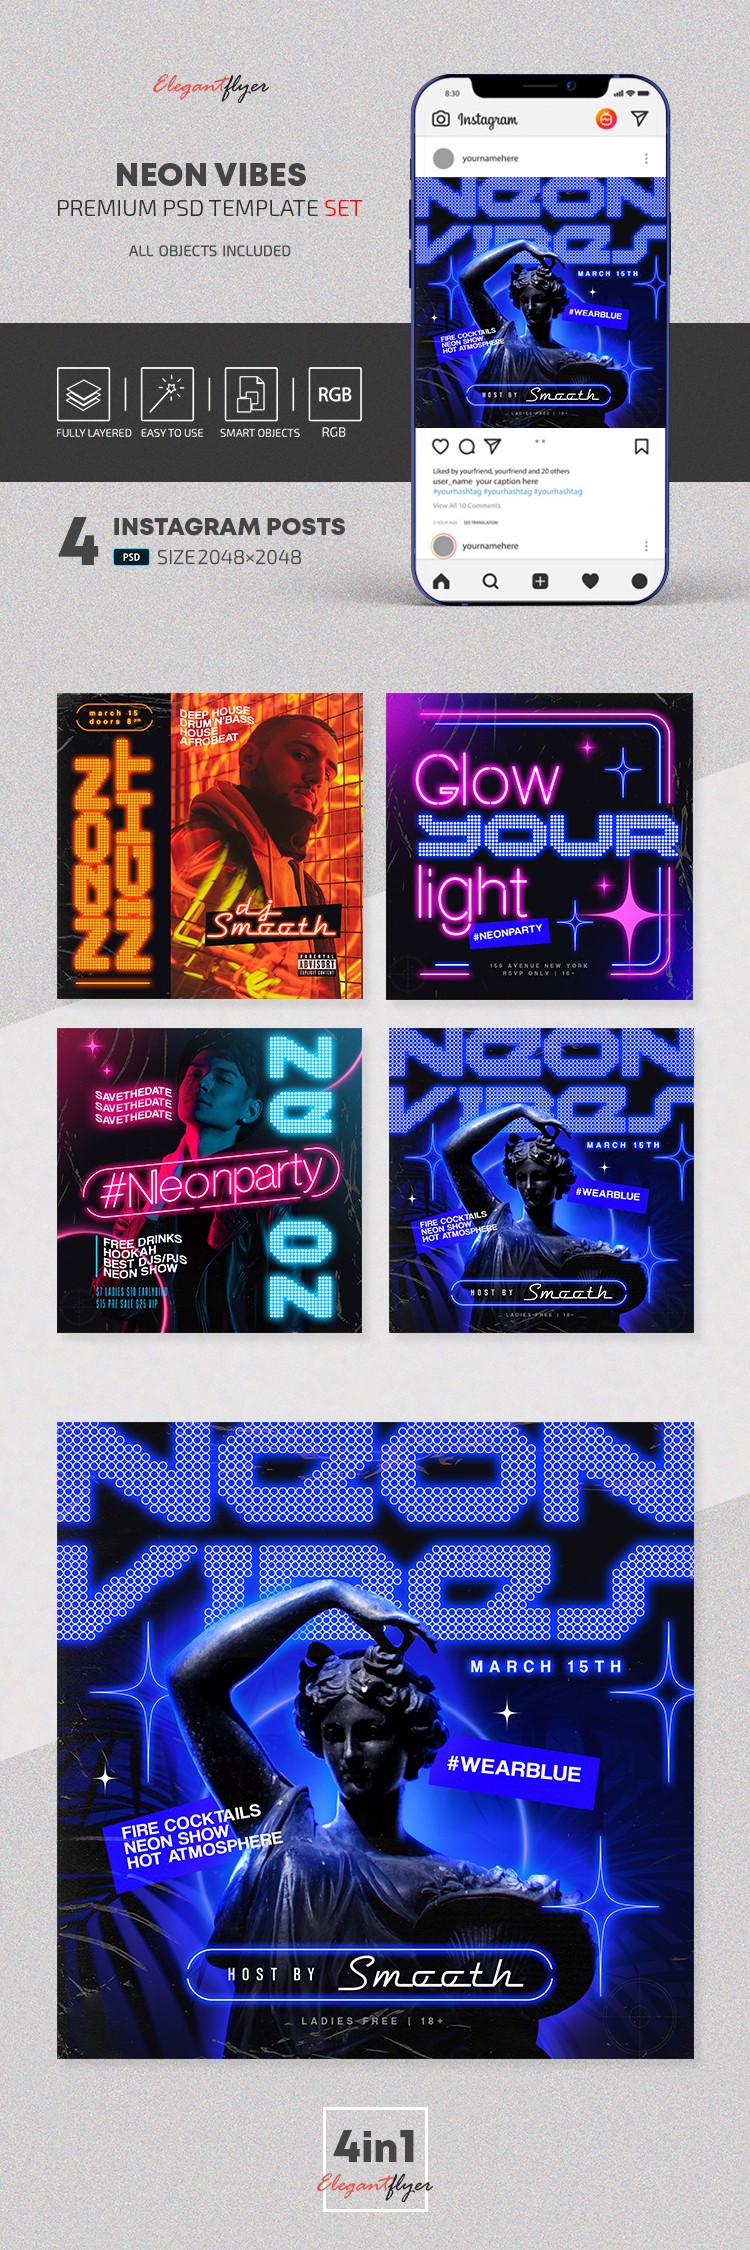 Neon Vibes Party Instagram by ElegantFlyer